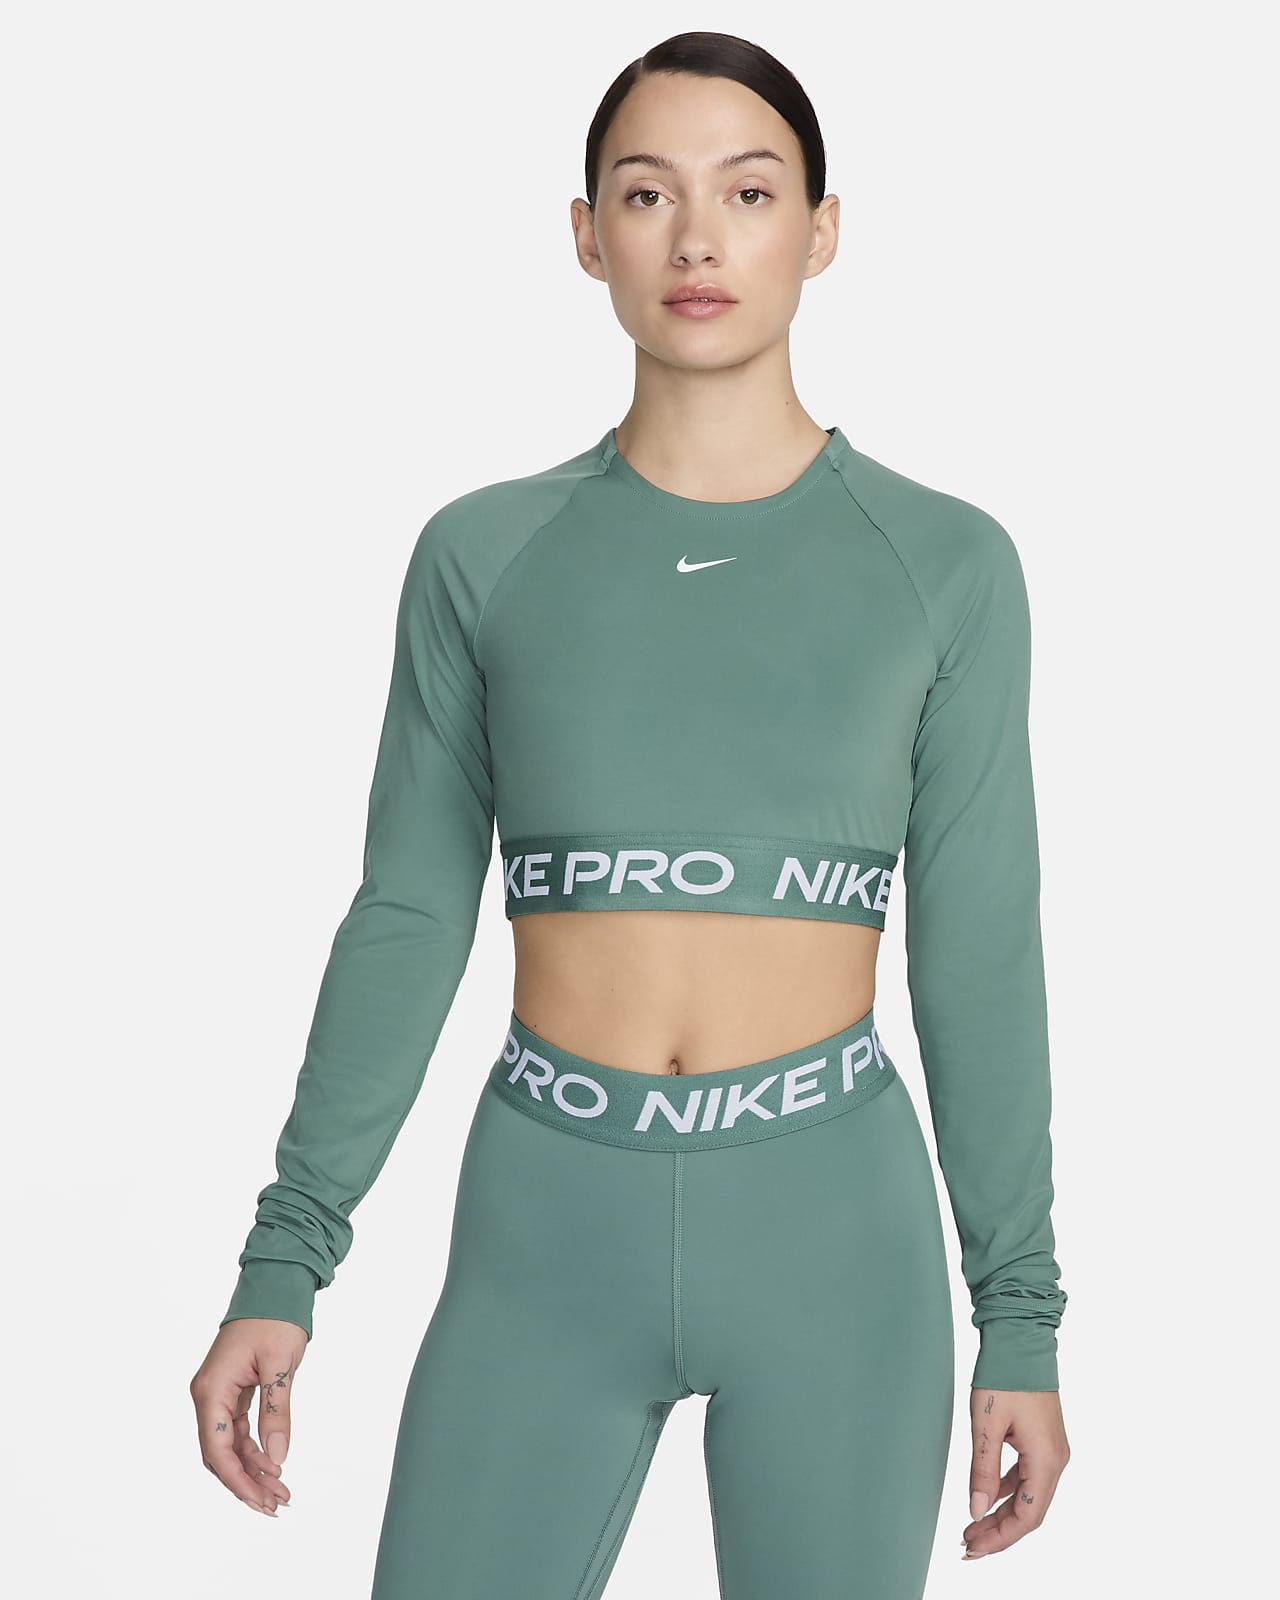 Nike Pro Dri-FIT verkürztes Longsleeve (Damen)